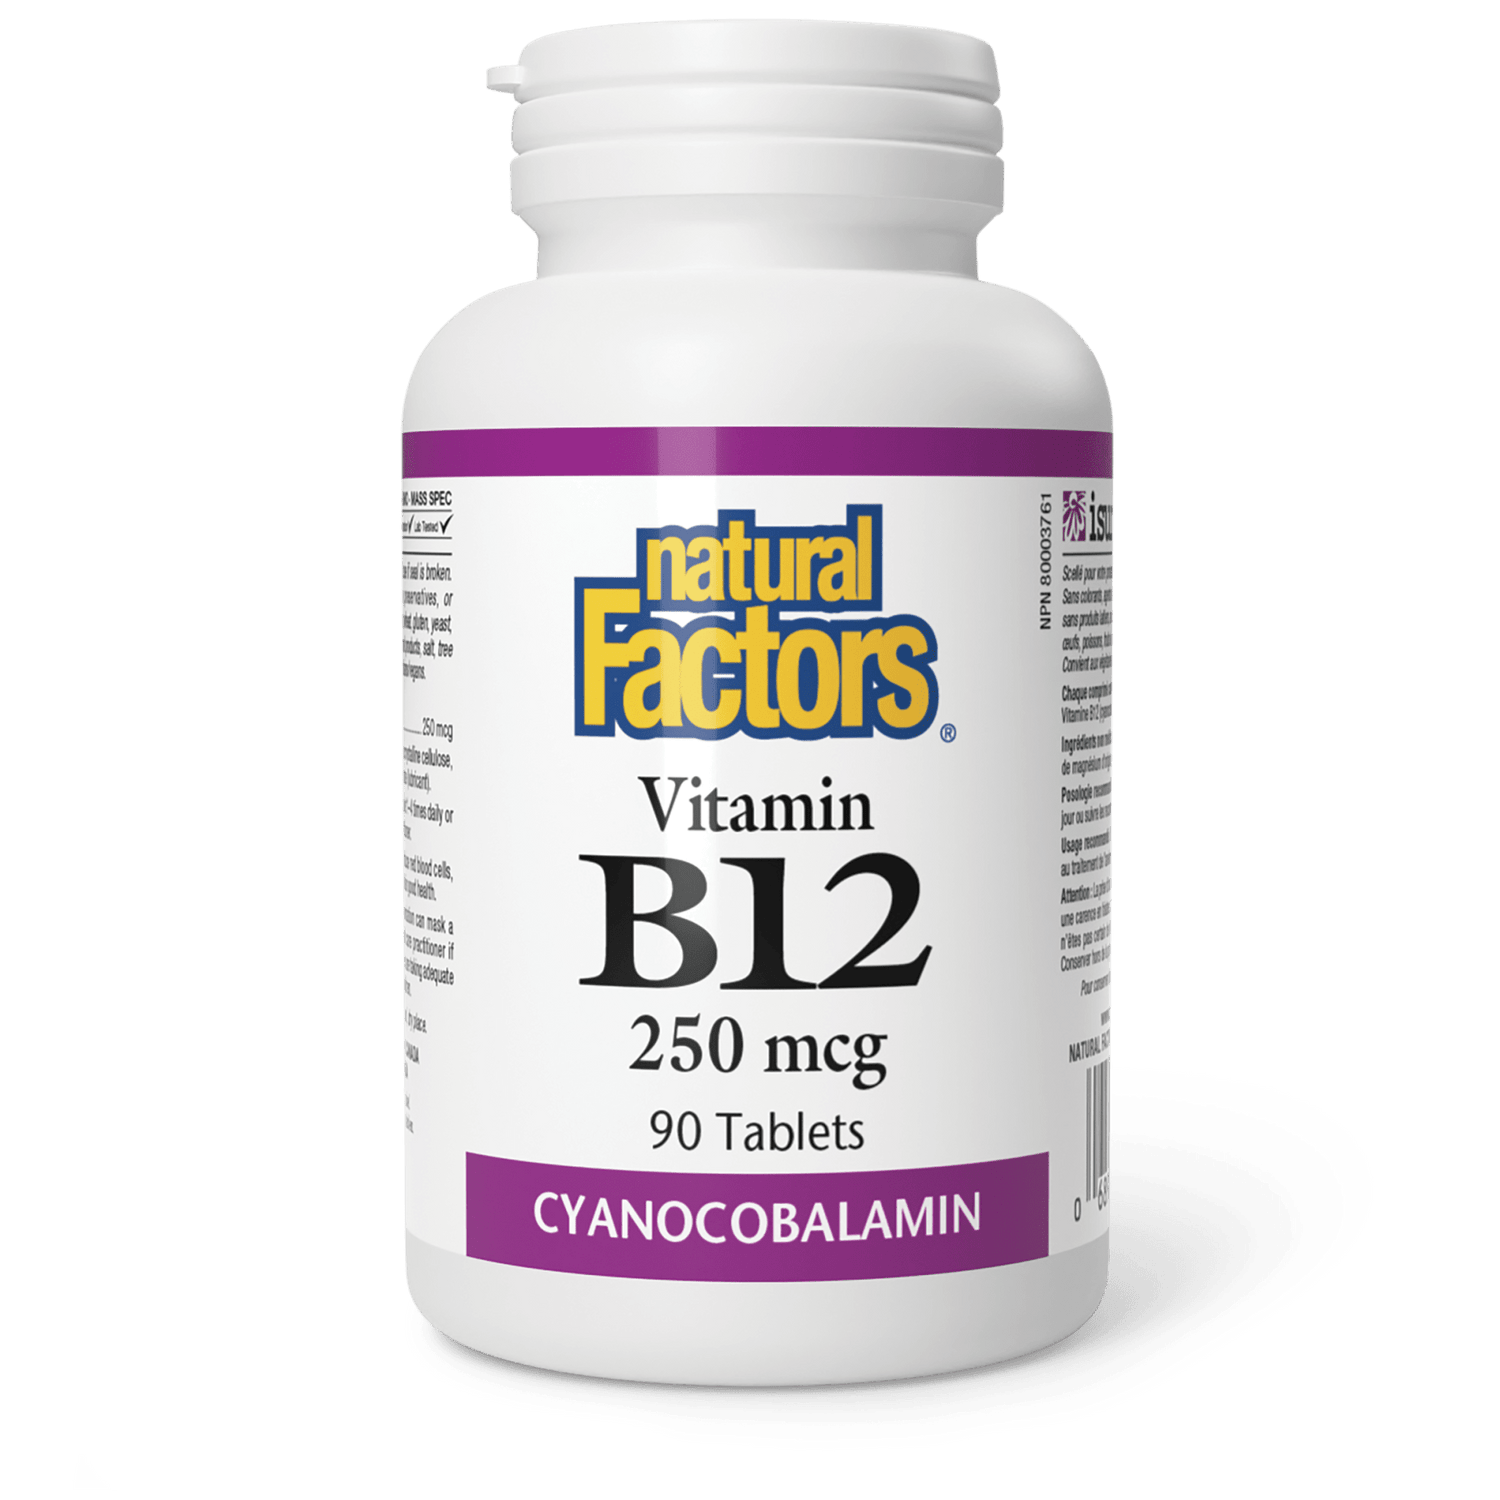 Vitamin B12 250 mcg, Natural Factors|v|image|1240